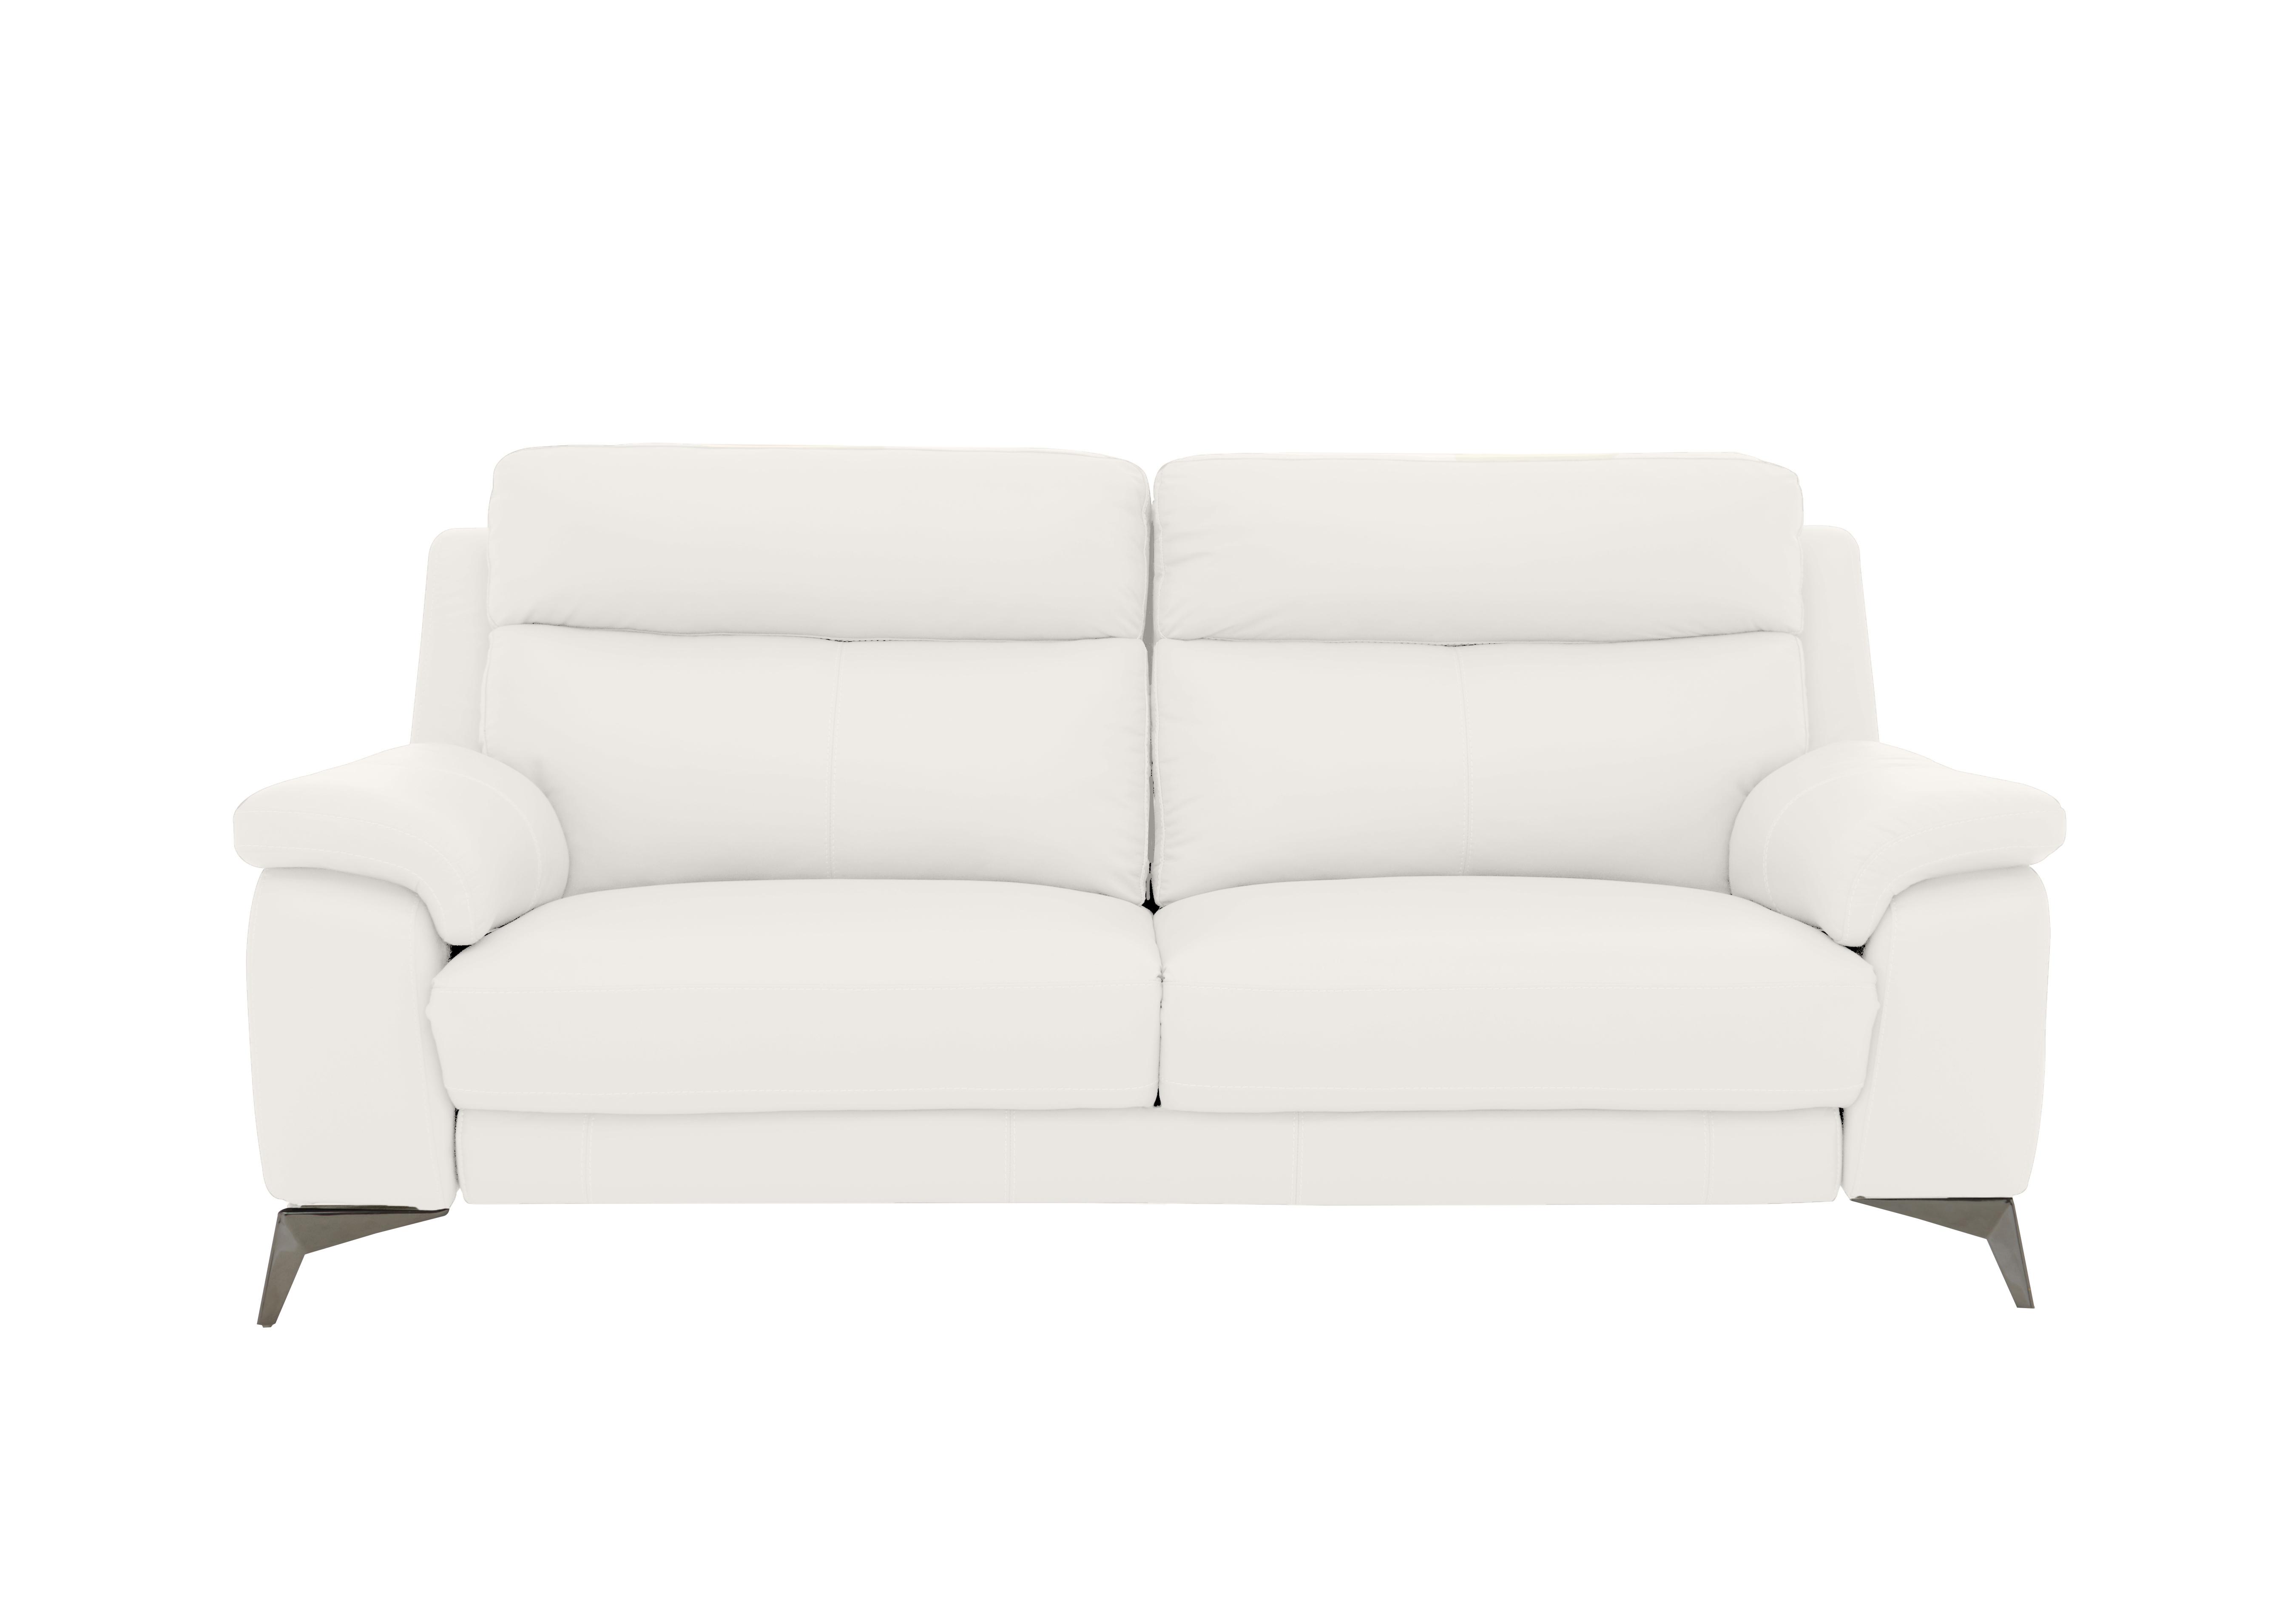 Missouri 3 Seater Leather Sofa in Bv-744d Star White on Furniture Village